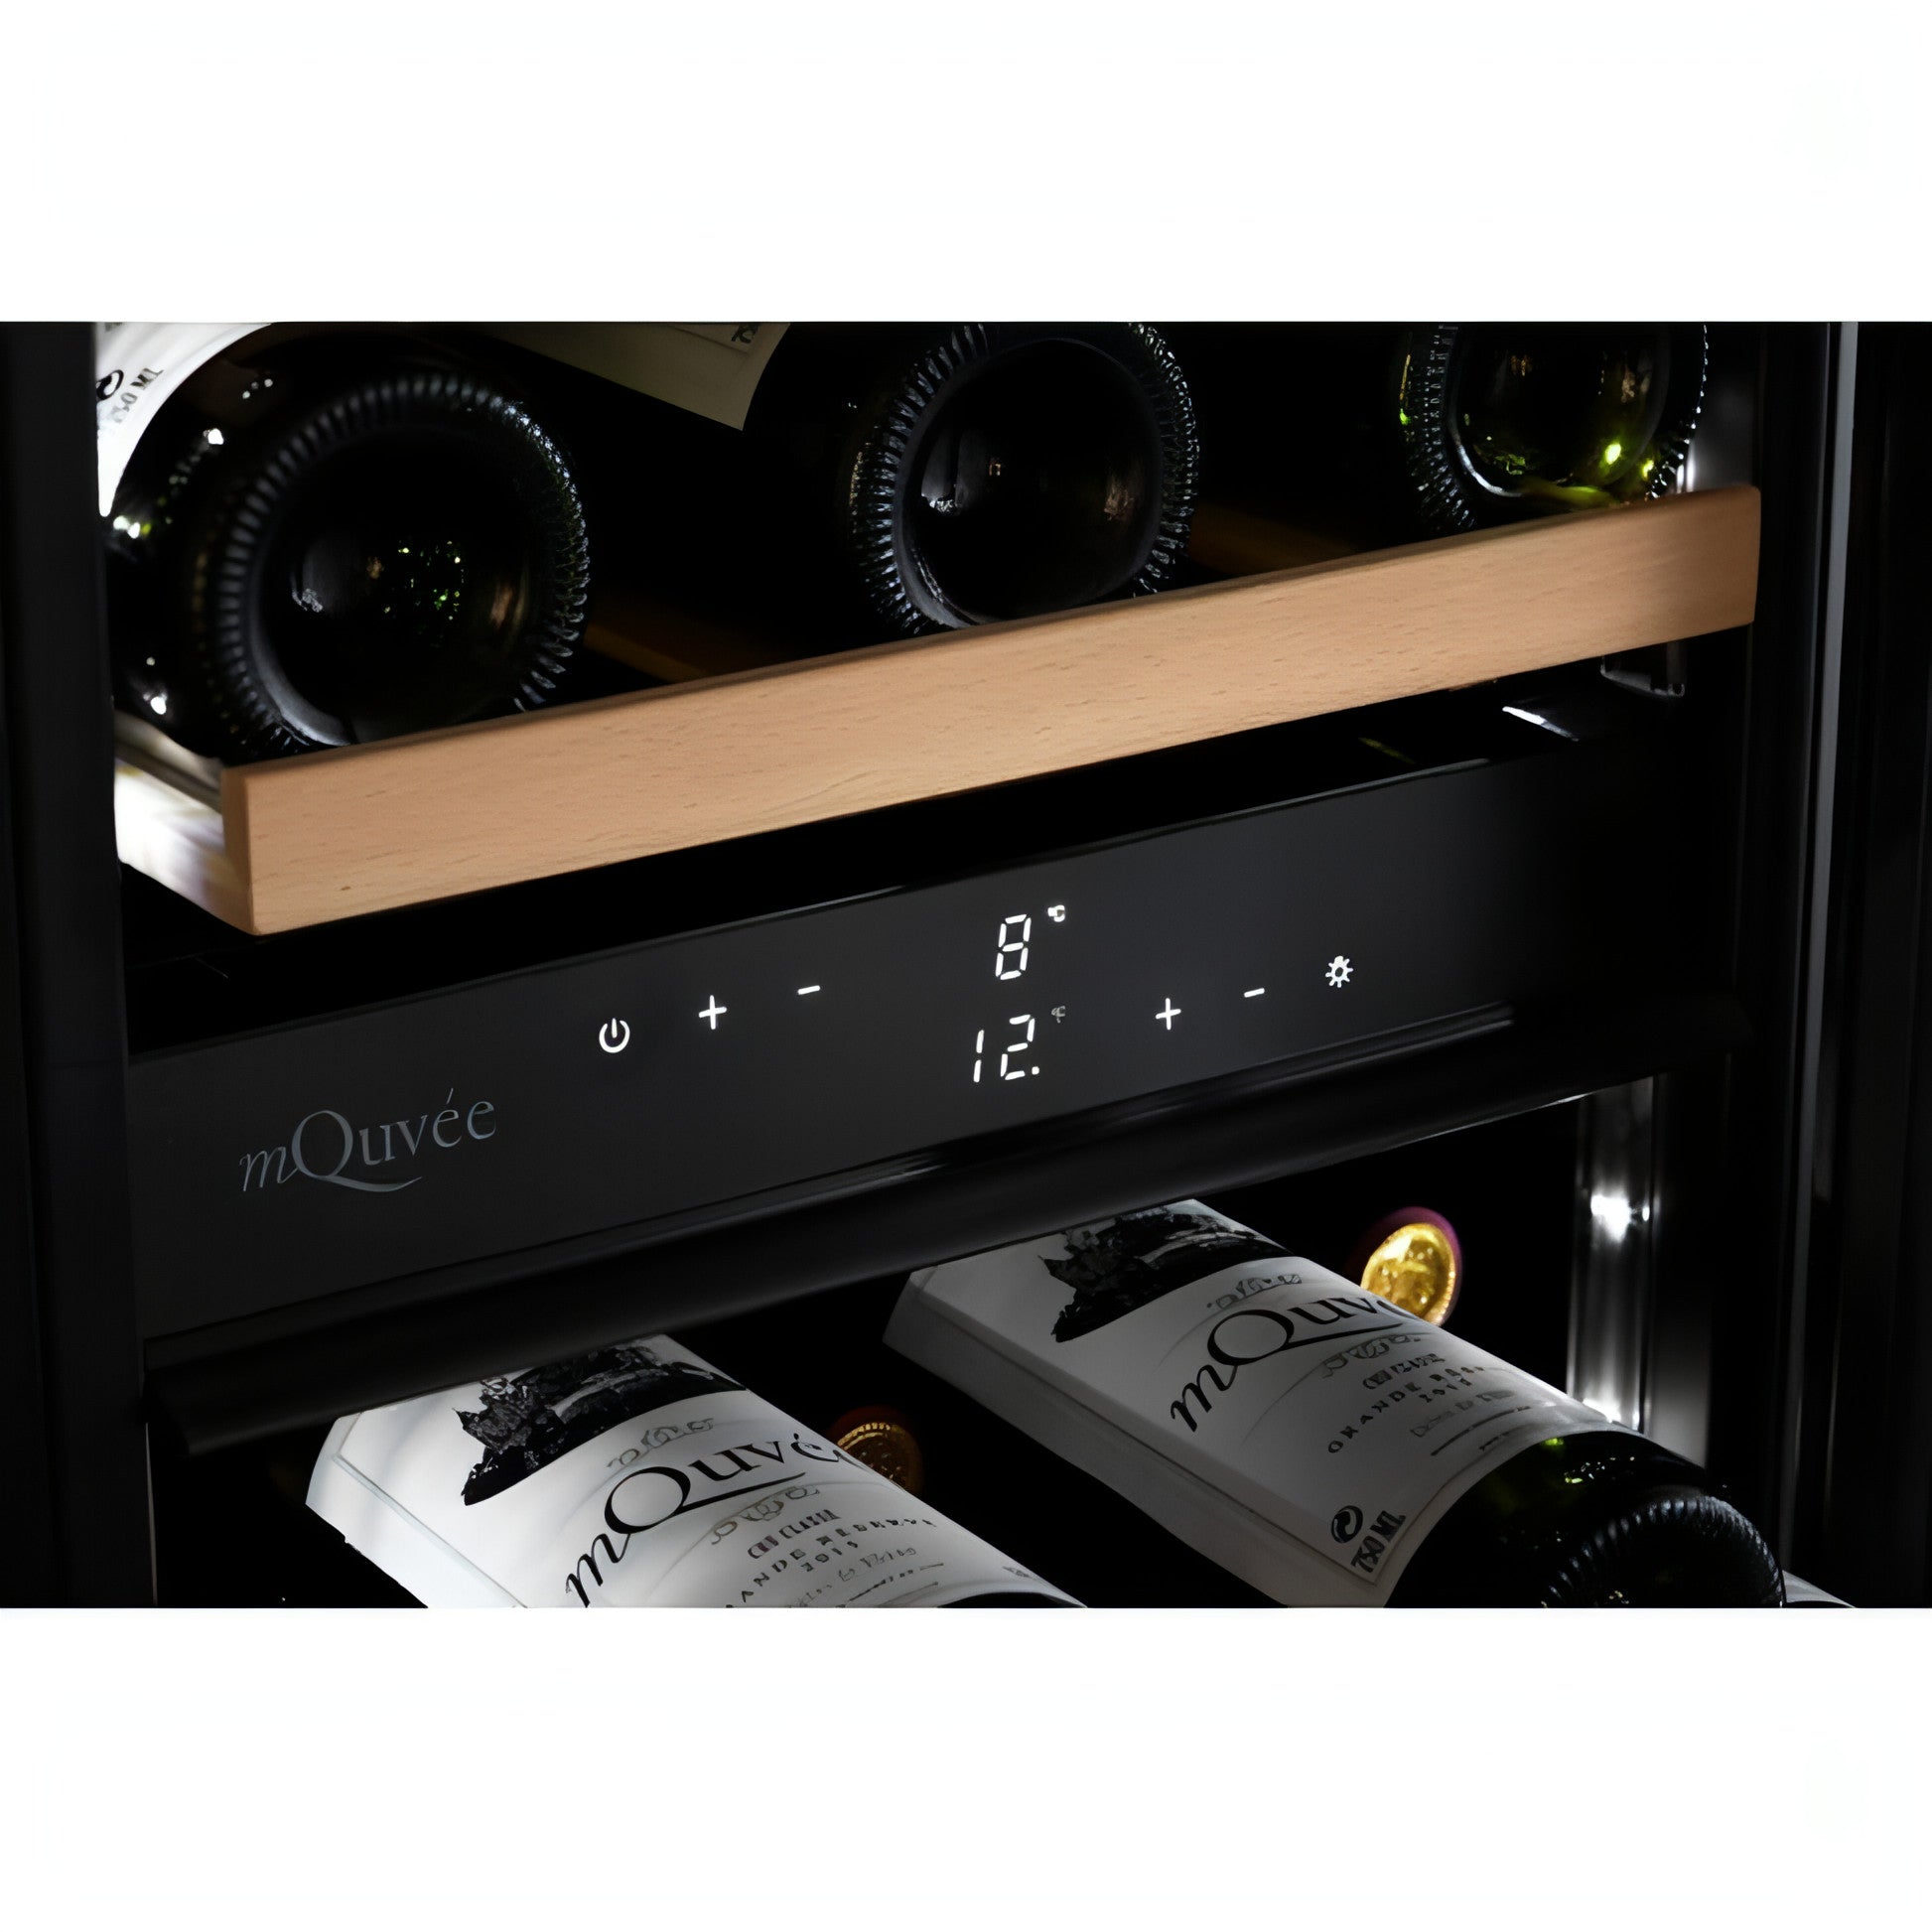 mQuvée - 400mm - Undercounter Wine Fridge - WineCave 700 40D - Anthracite Black